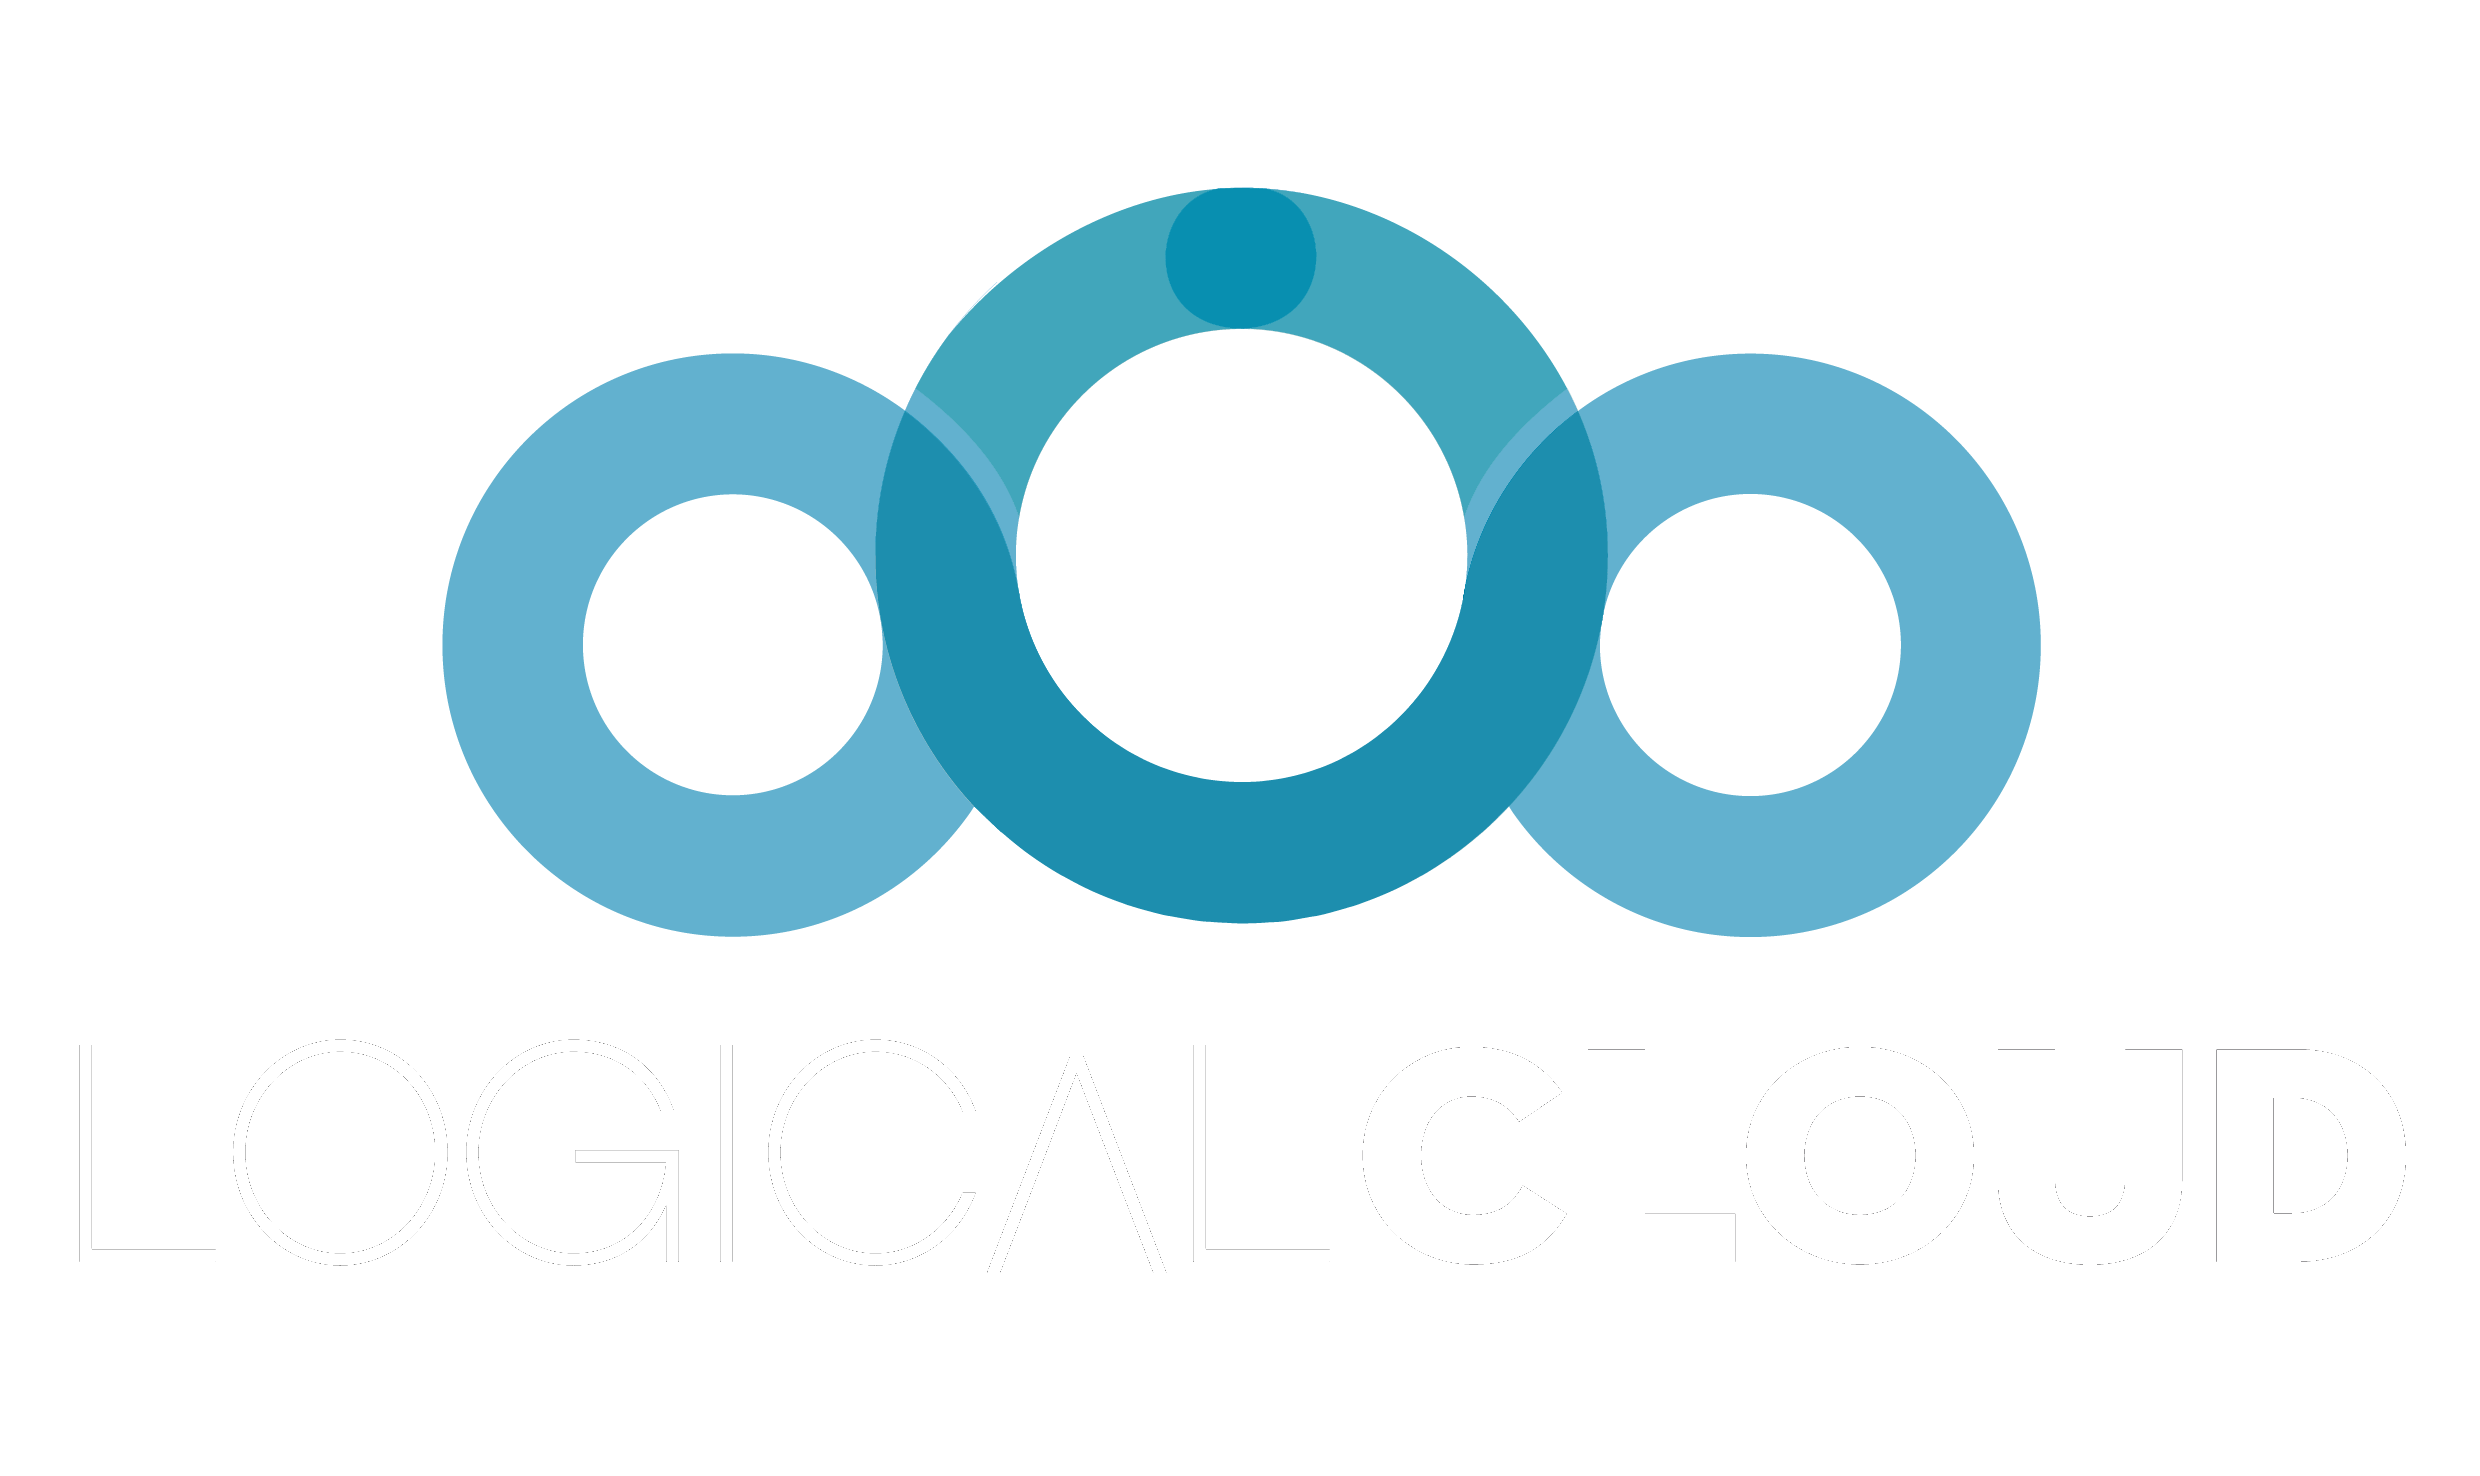 Logical Cloud